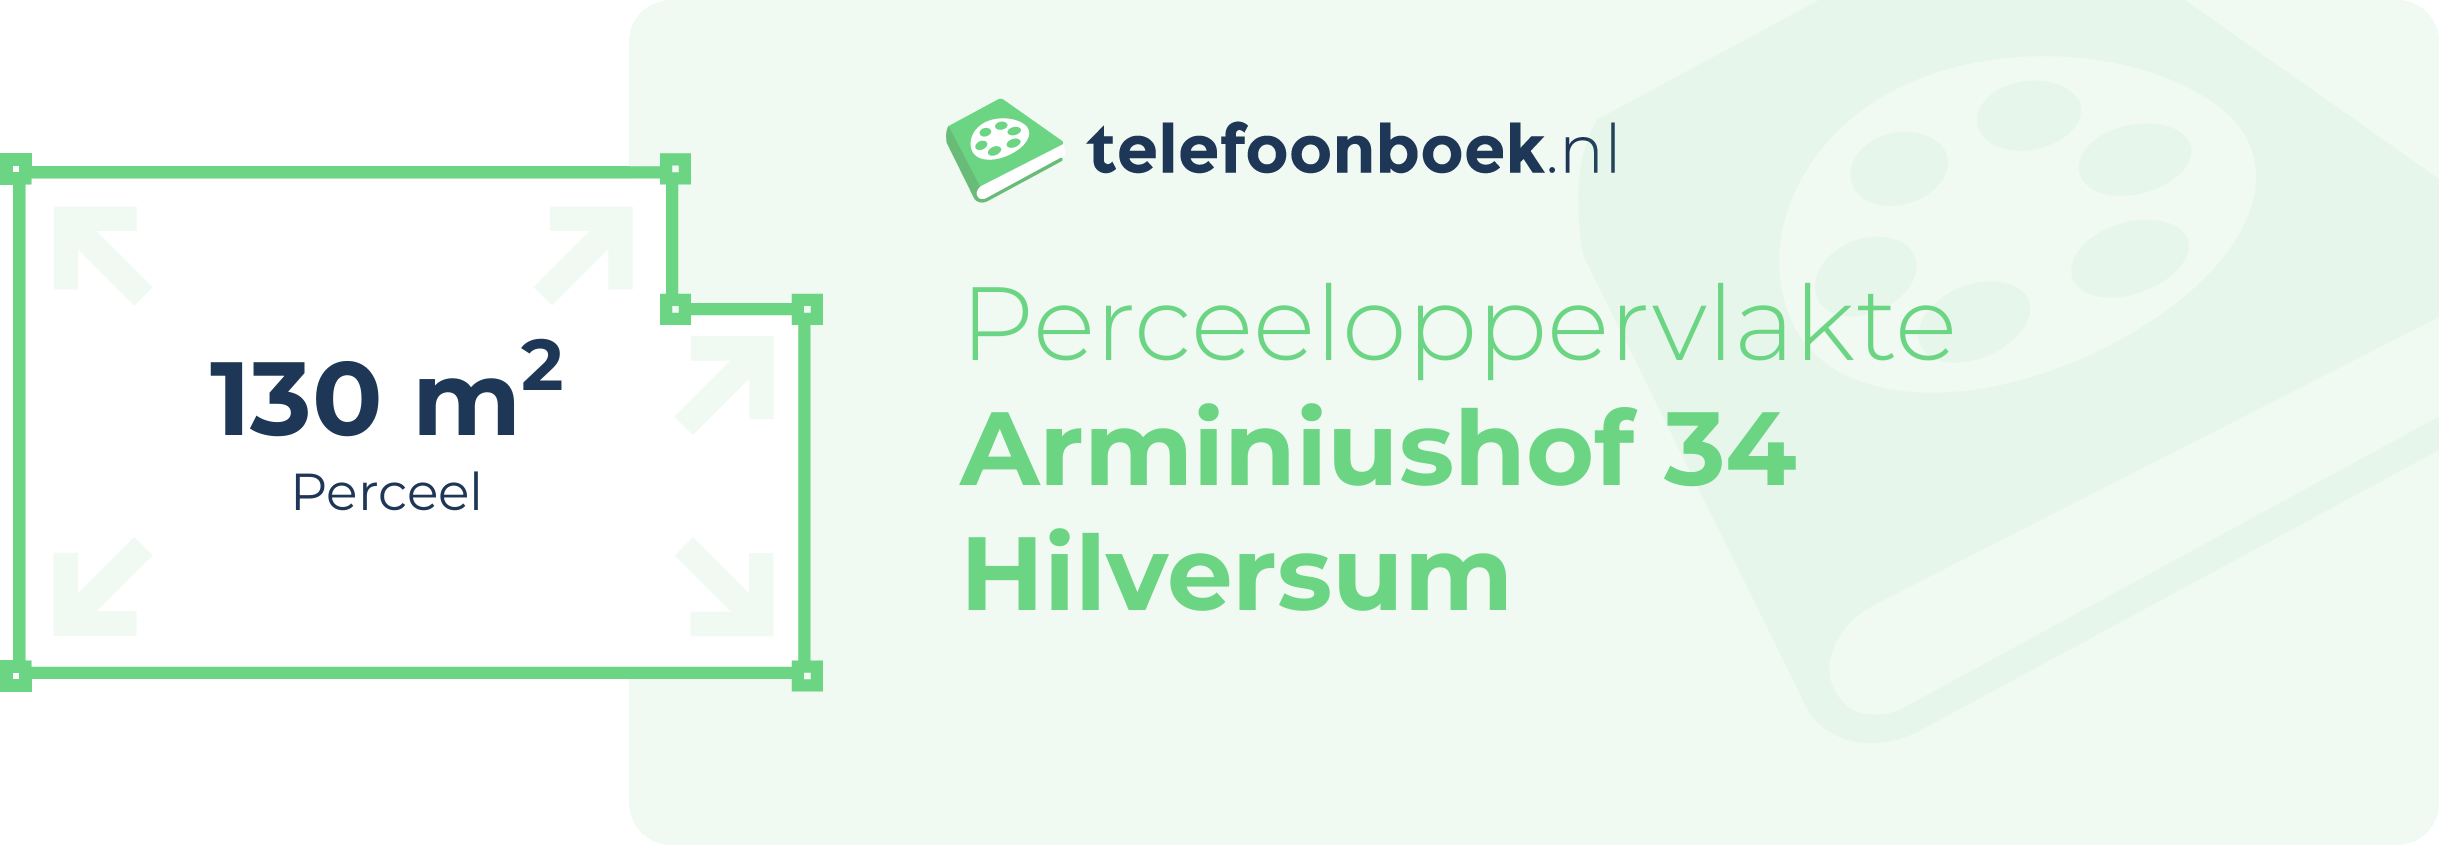 Perceeloppervlakte Arminiushof 34 Hilversum